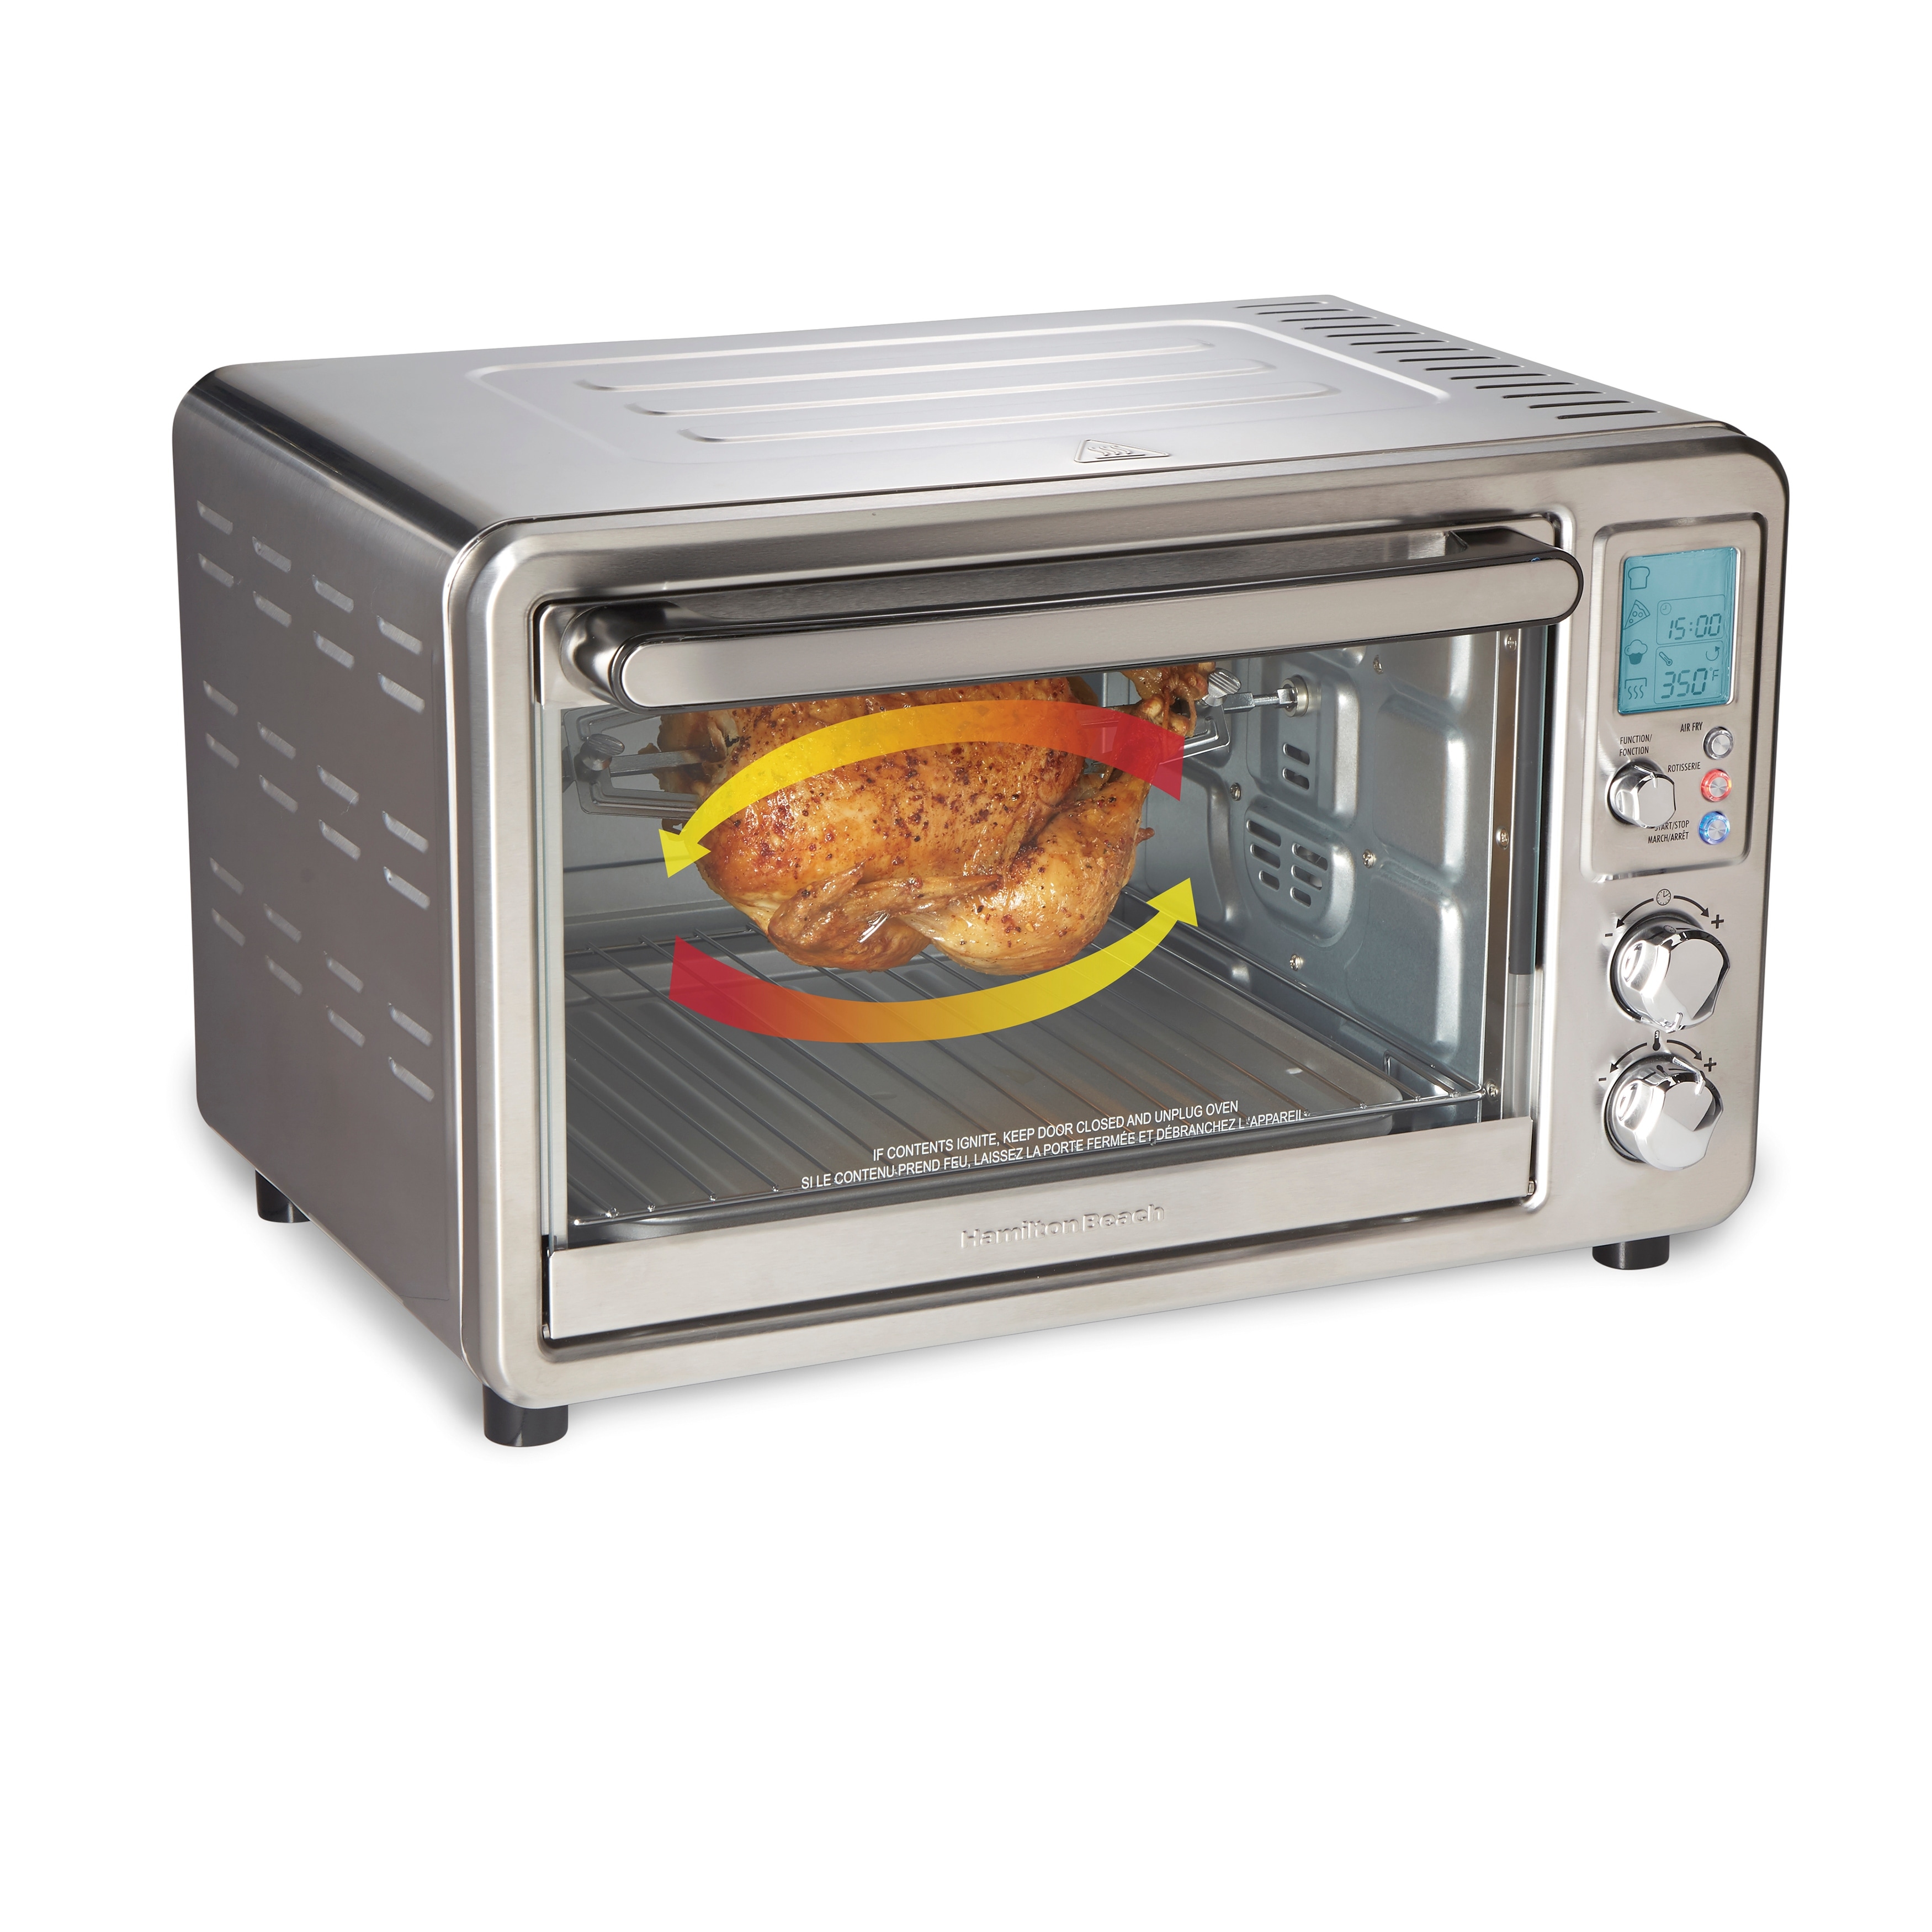 https://ak1.ostkcdn.com/images/products/is/images/direct/2e1b279baf488f82c3e2d978091ec41983b9dce9/Hamilton-Beach-Sure-Crisp-Digital-Air-Fryer-Toaster-Oven-with-Rotisserie-6-Slice-Capacity.jpg